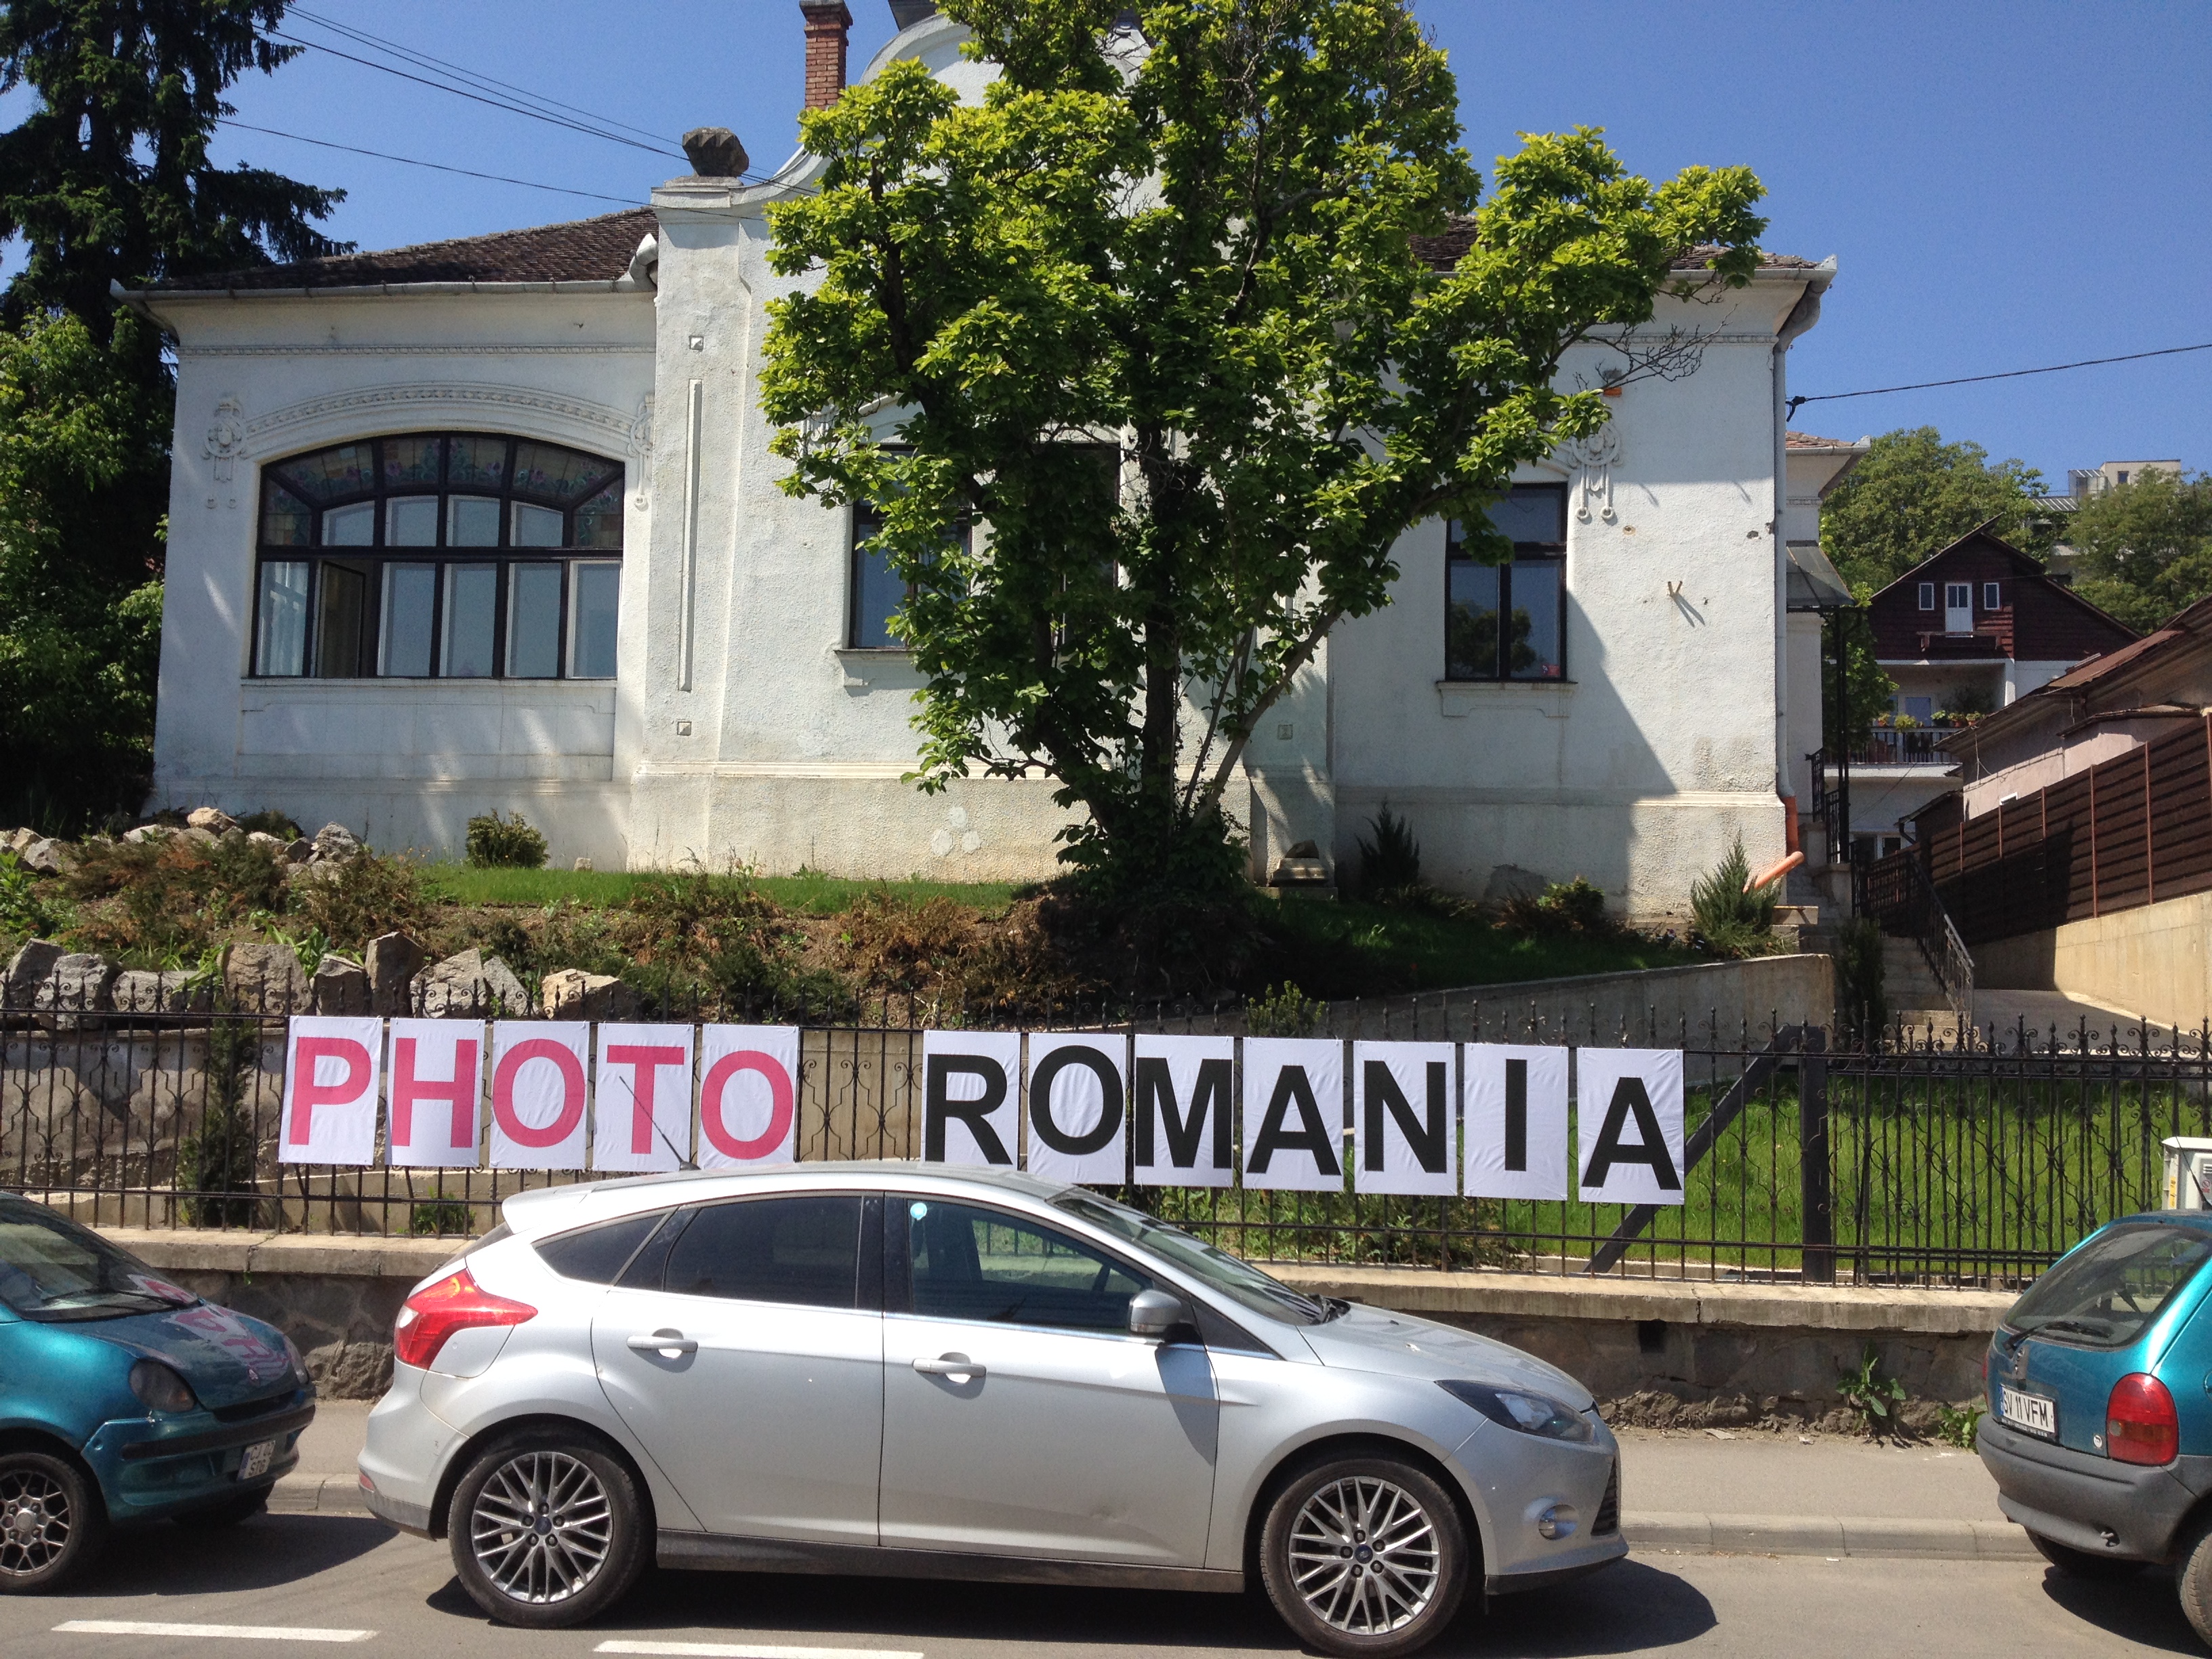 REVIEW: Photo Romania Festival 2016